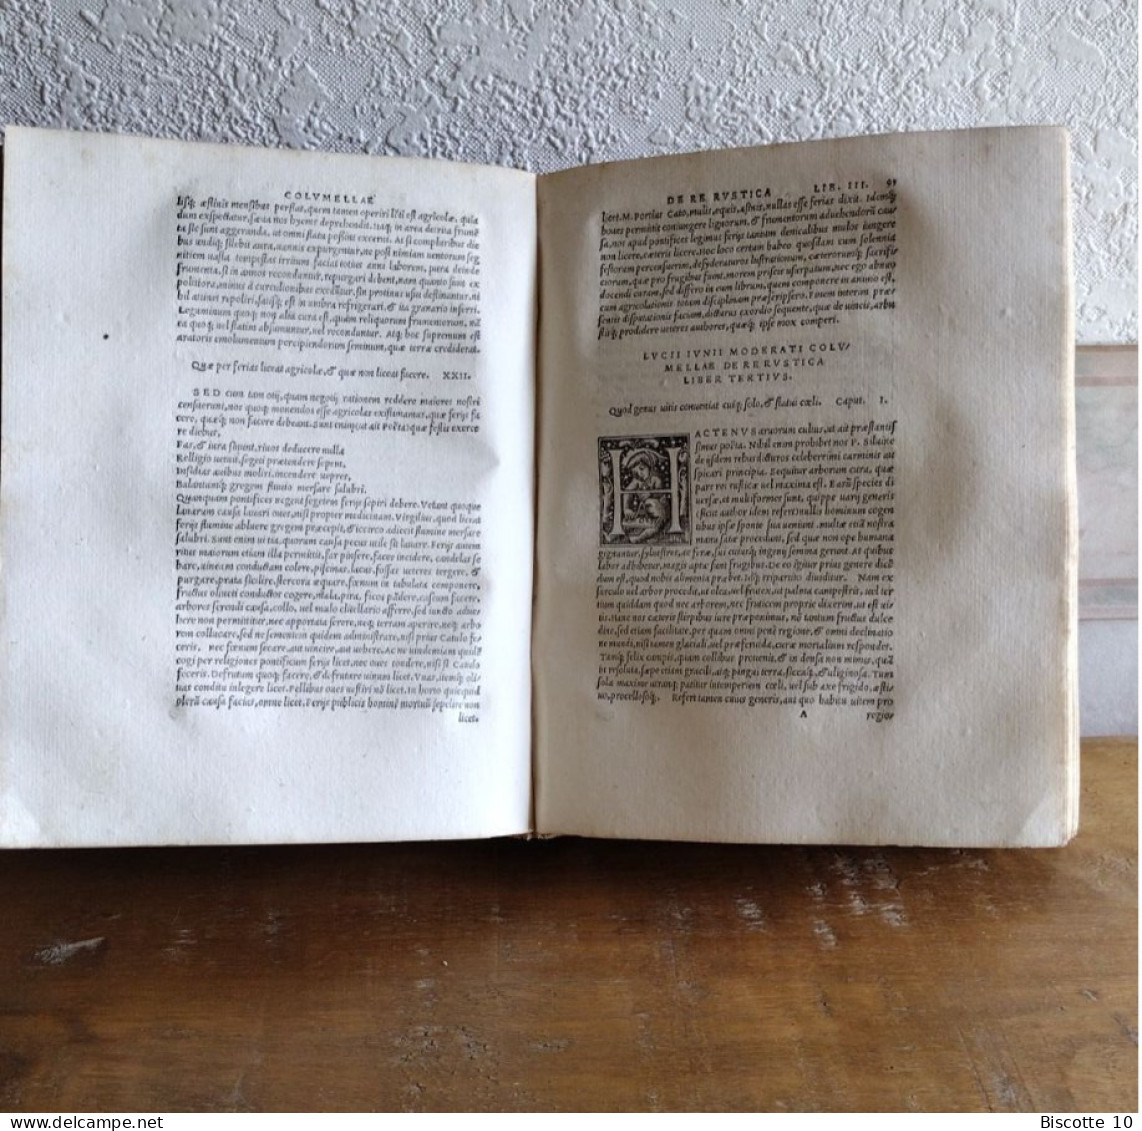 Libri de re rustica , année 1535 . Latin .